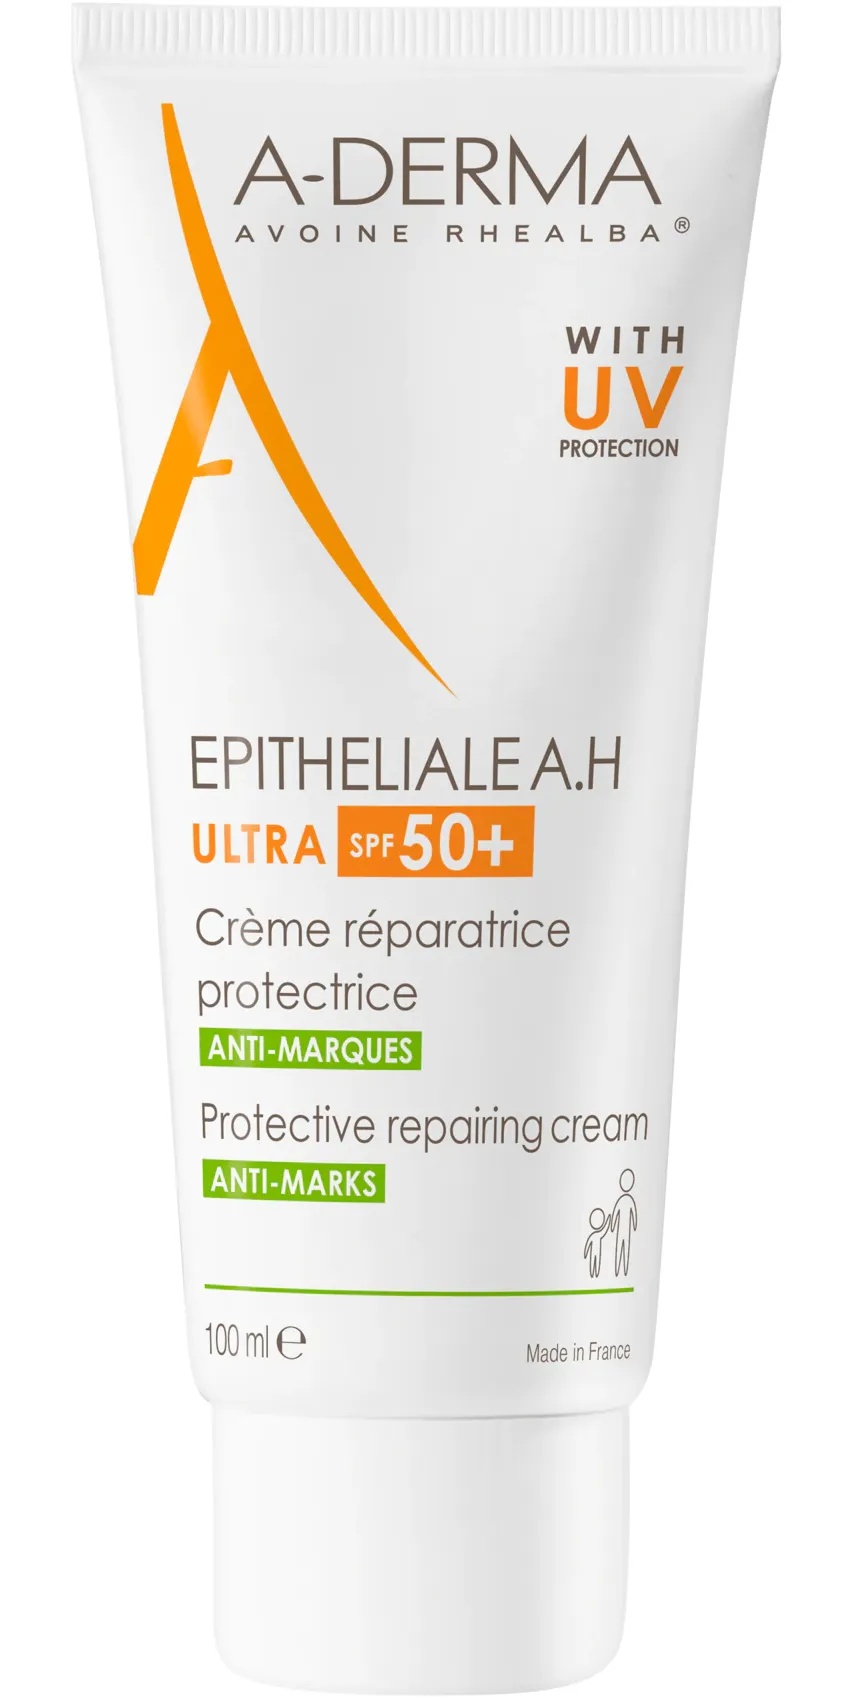 A-Derma Epitheliale A.H Ultra Protective Repairing Cream SPF 50+